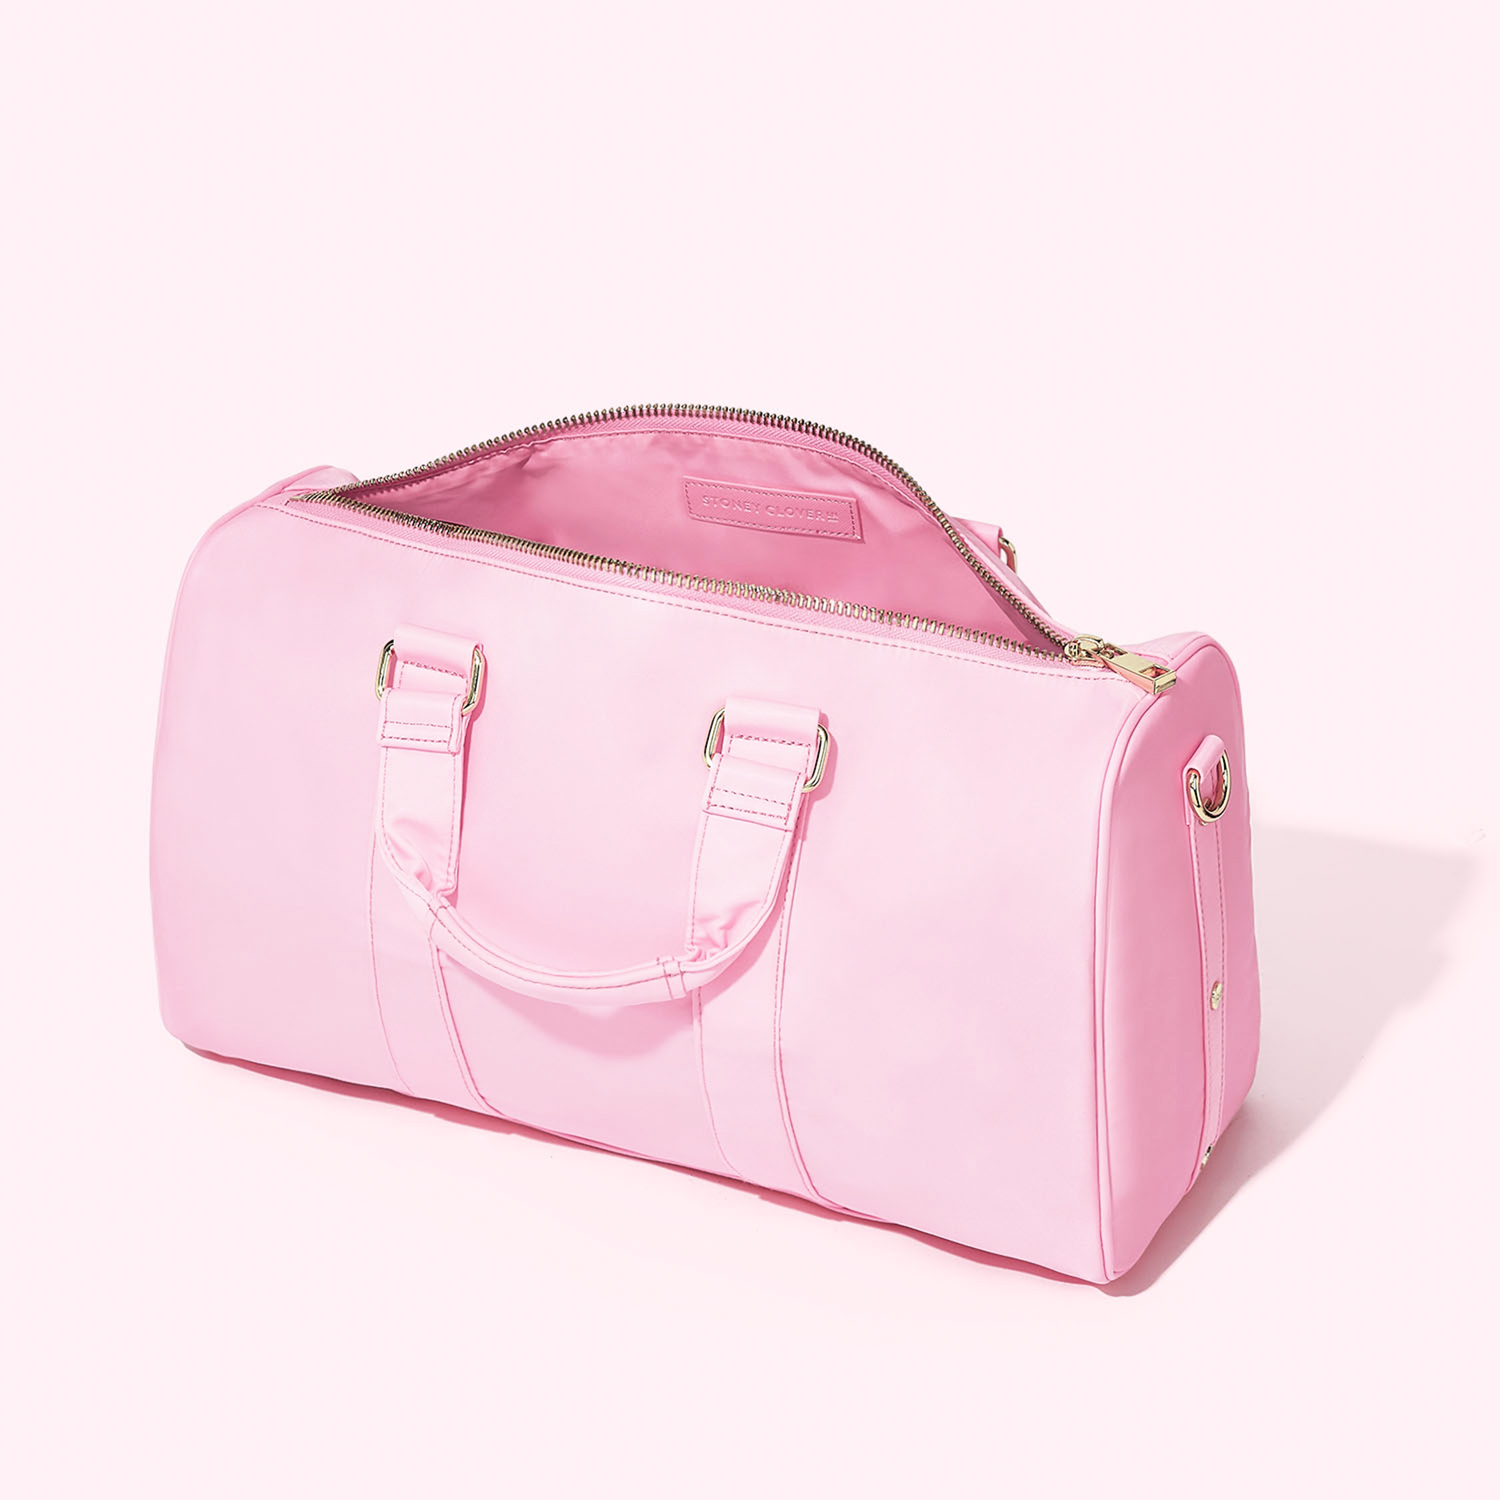 Dooney & Bourke Large Leather & Canvas Duffle Bag Purse Handbag Carry On |  eBay